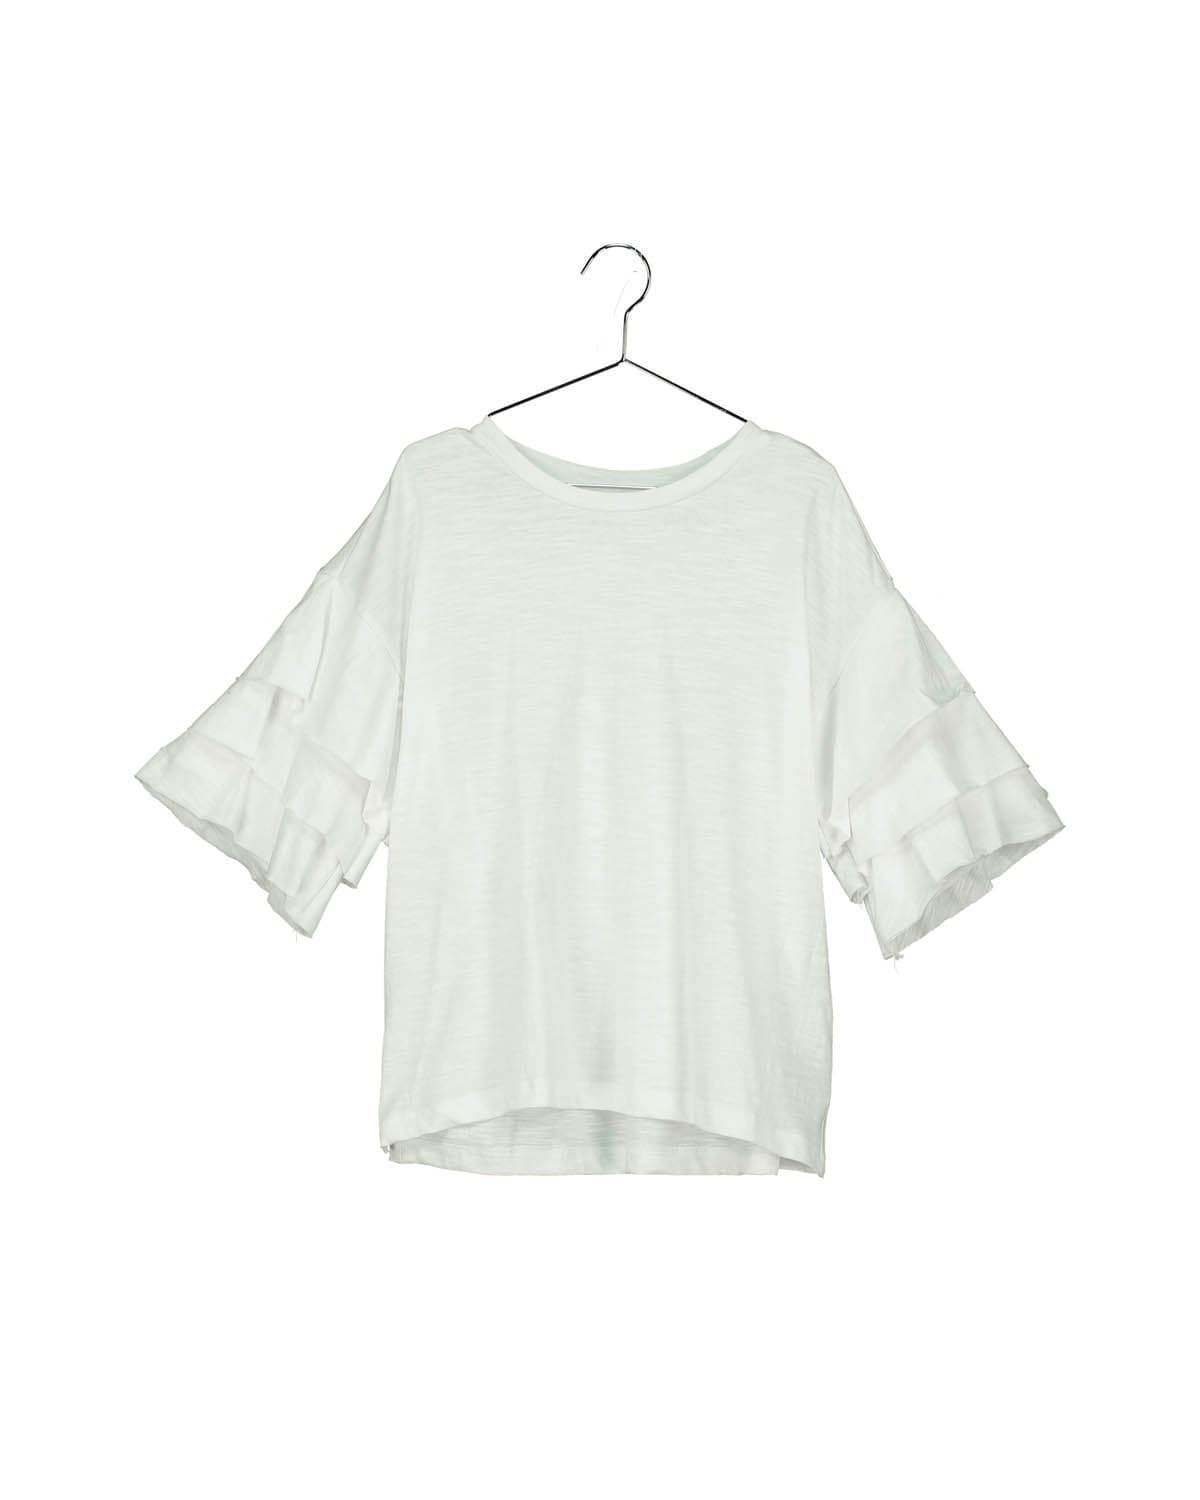 Camiseta blanca manga corta. - Imagen 1